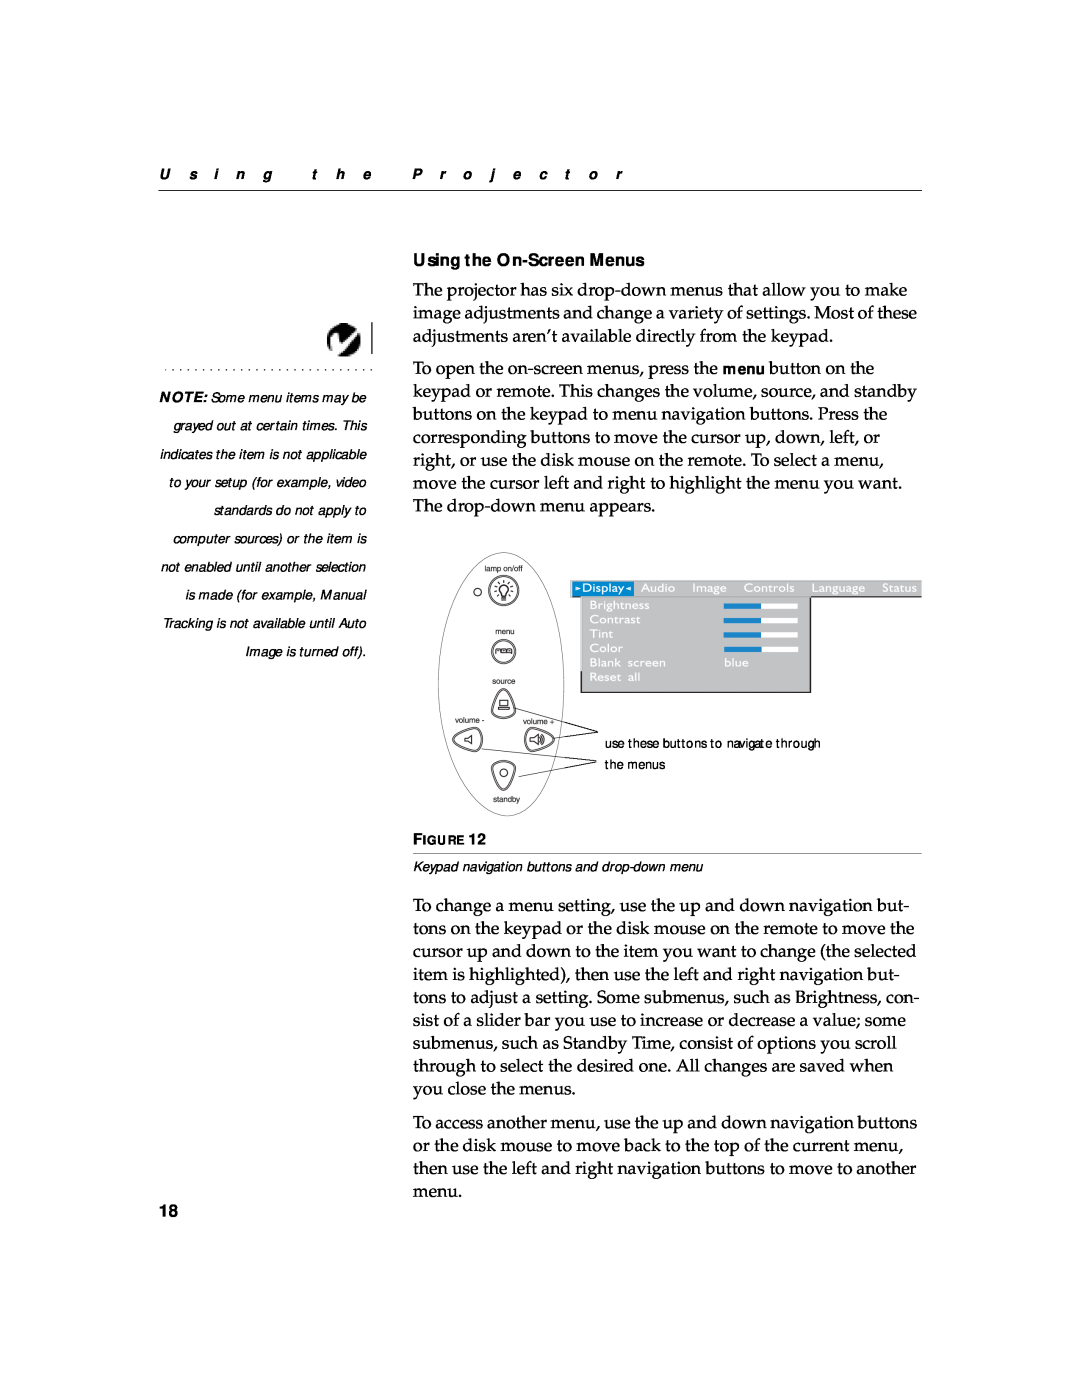 InFocus 330 manual Using the On-Screen Menus, Keypad navigation buttons and drop-down menu 